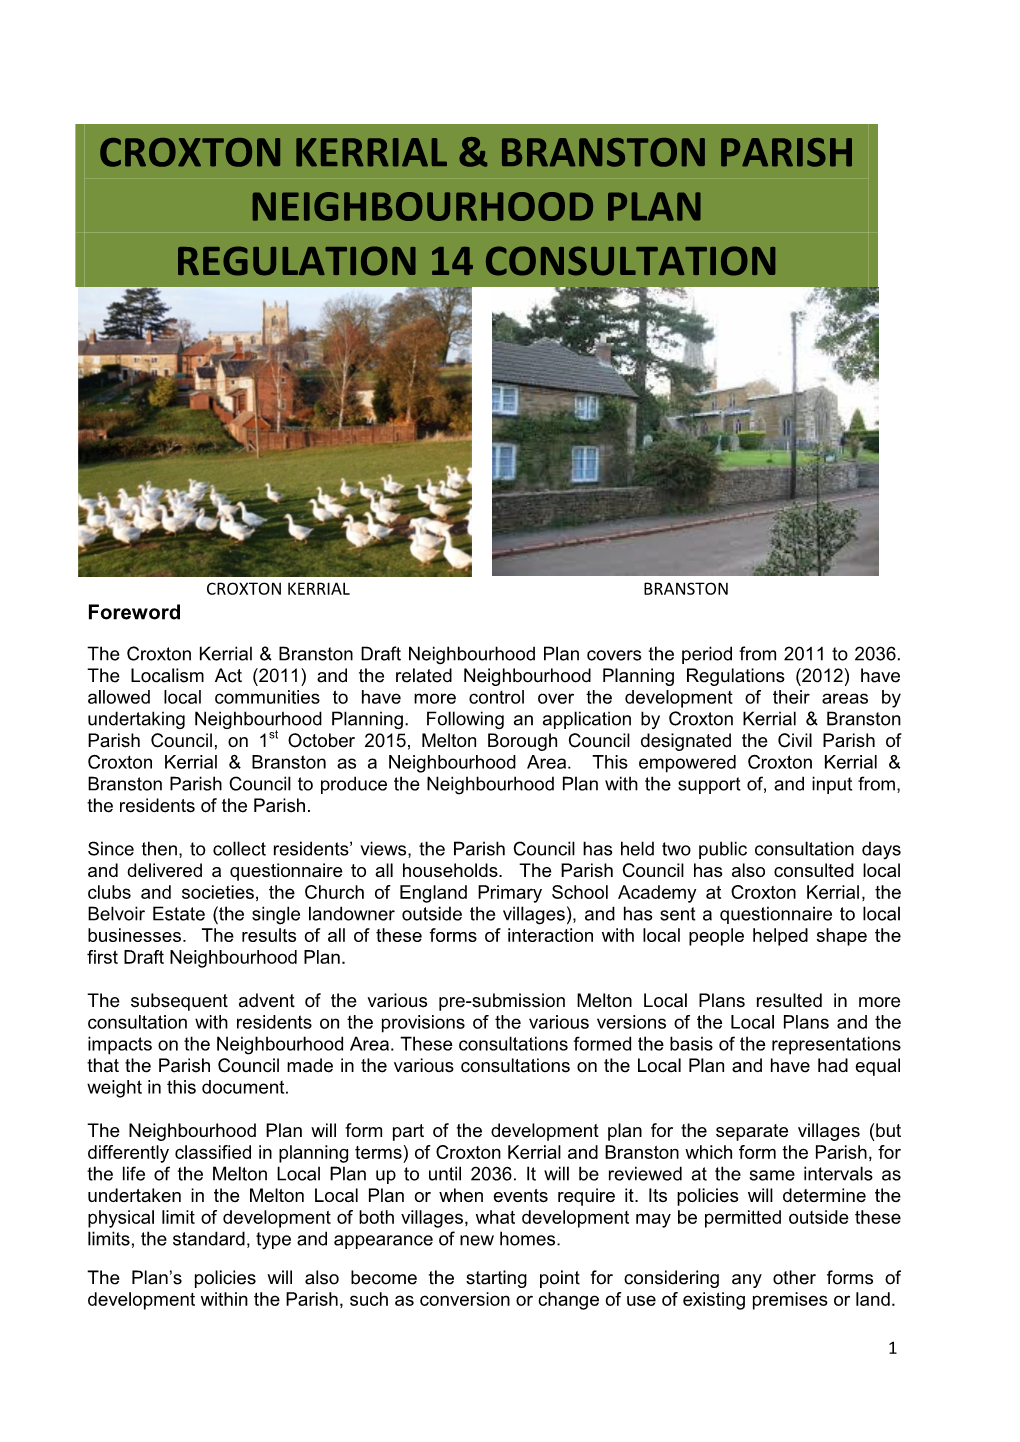 Croxton Kerrial & Branston Parish Neighbourhood Plan Regulation 14